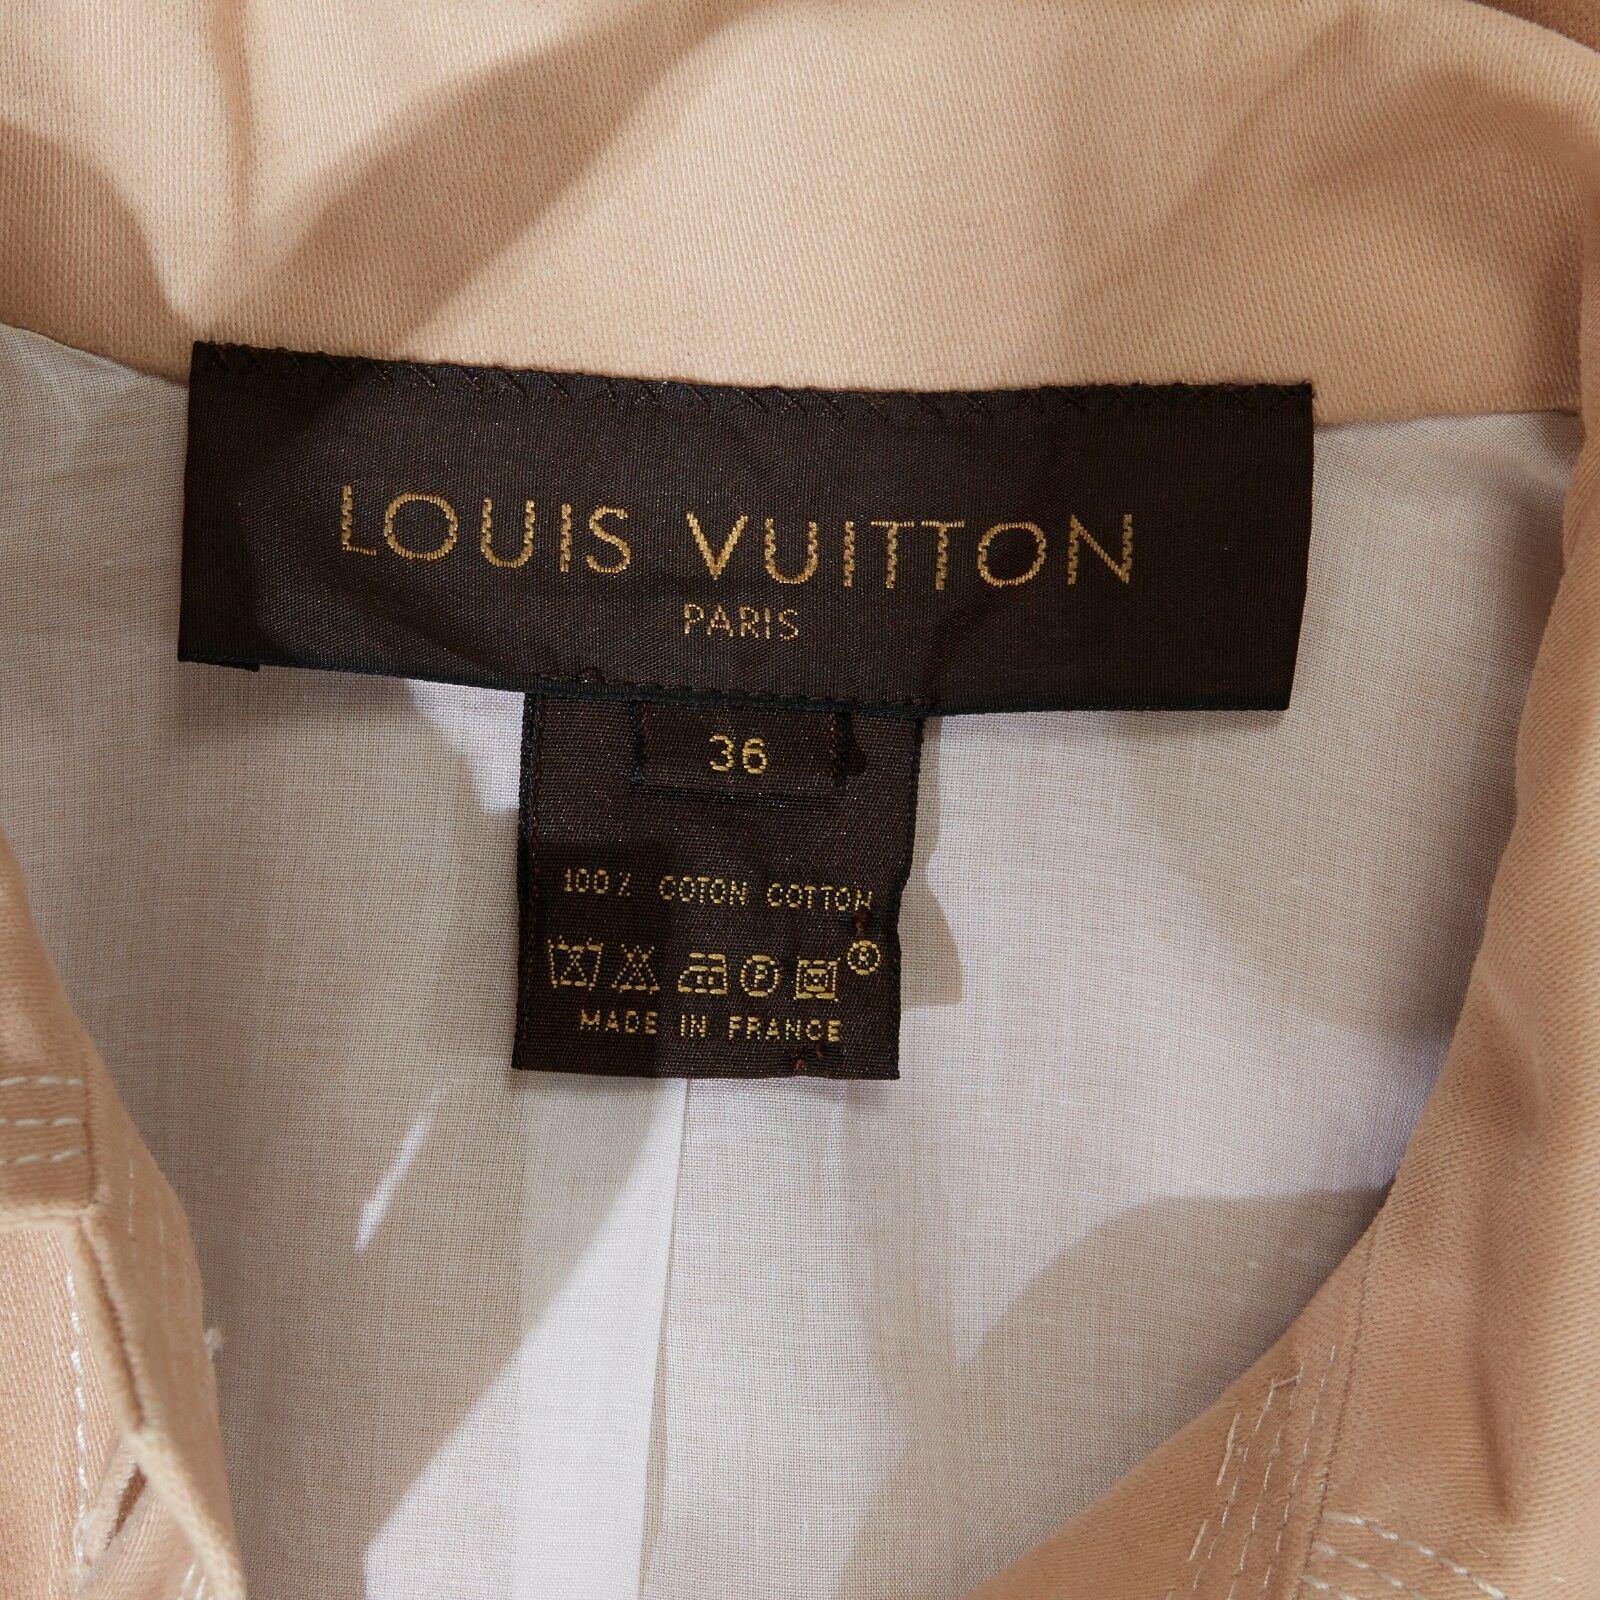 LOUIS VUITTON beige cotton white overstitched pocket detail shirt jacket FR36 S 4